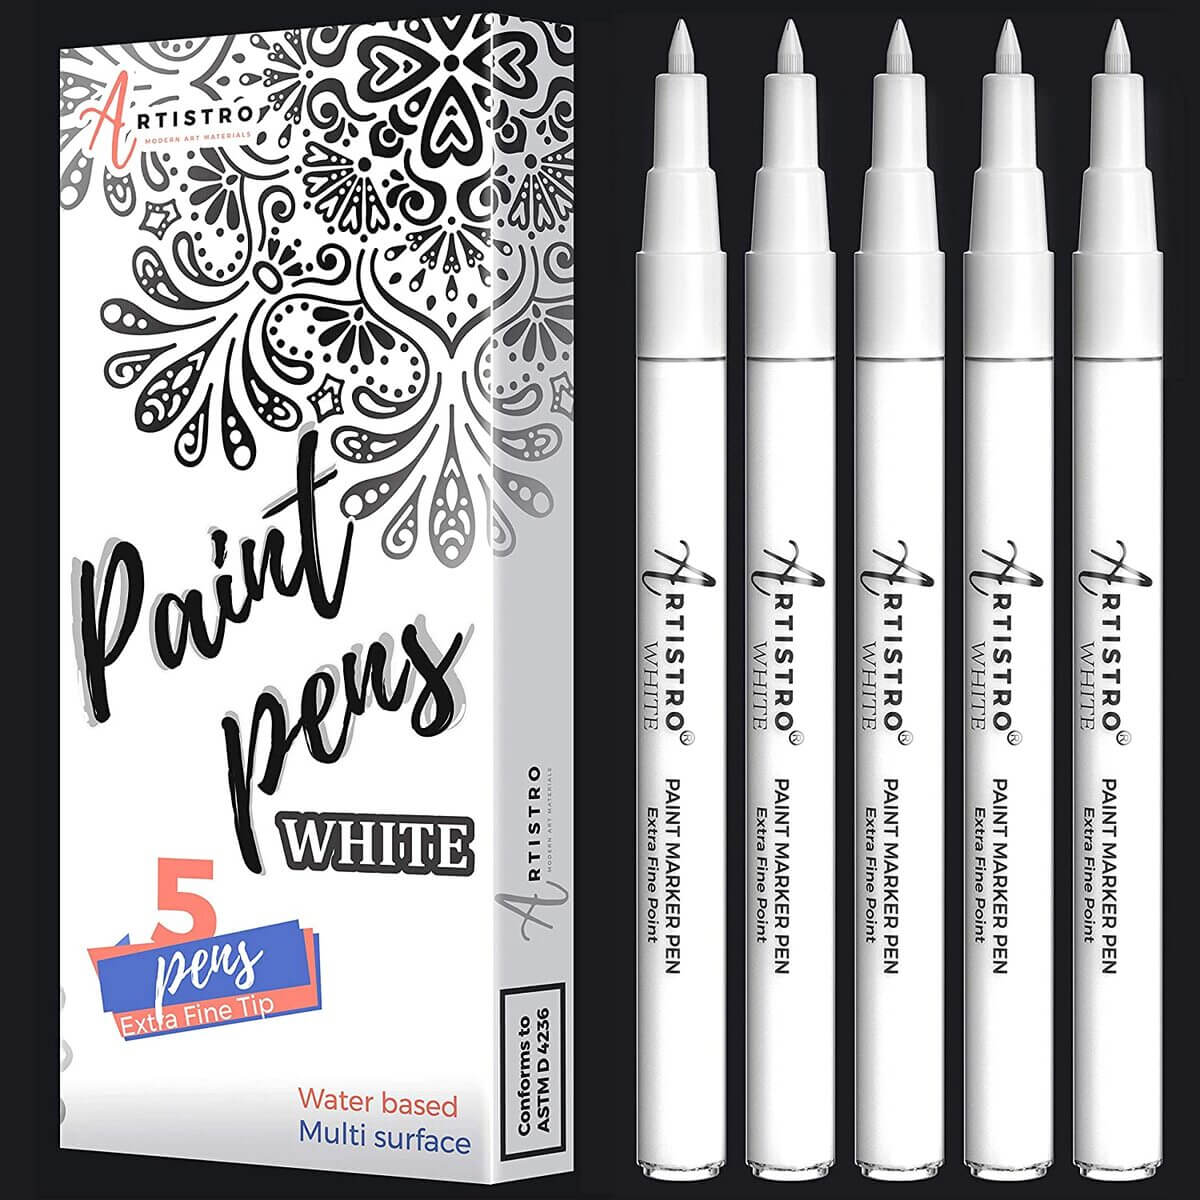 KINGART® PRO Acrylic Paint Pens, 2mm Medium Tip Size, Set of 12